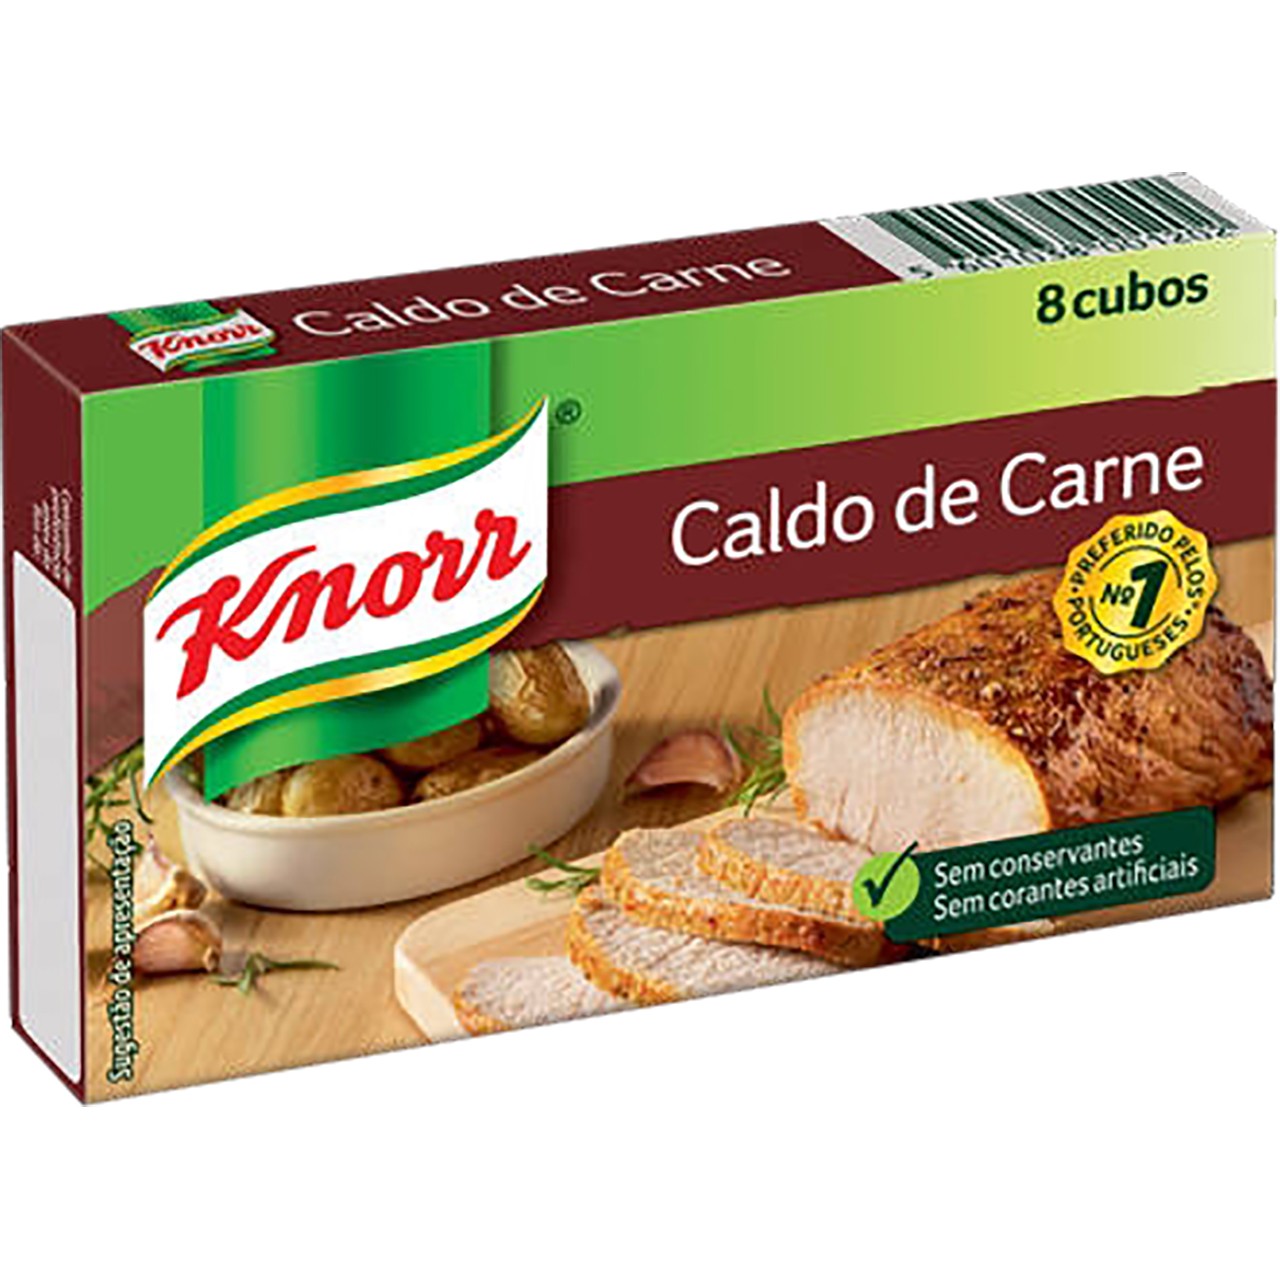 Fleisch-Brühwürfel - Caldo de Carnes 8 Stück - Knorr - Portugal